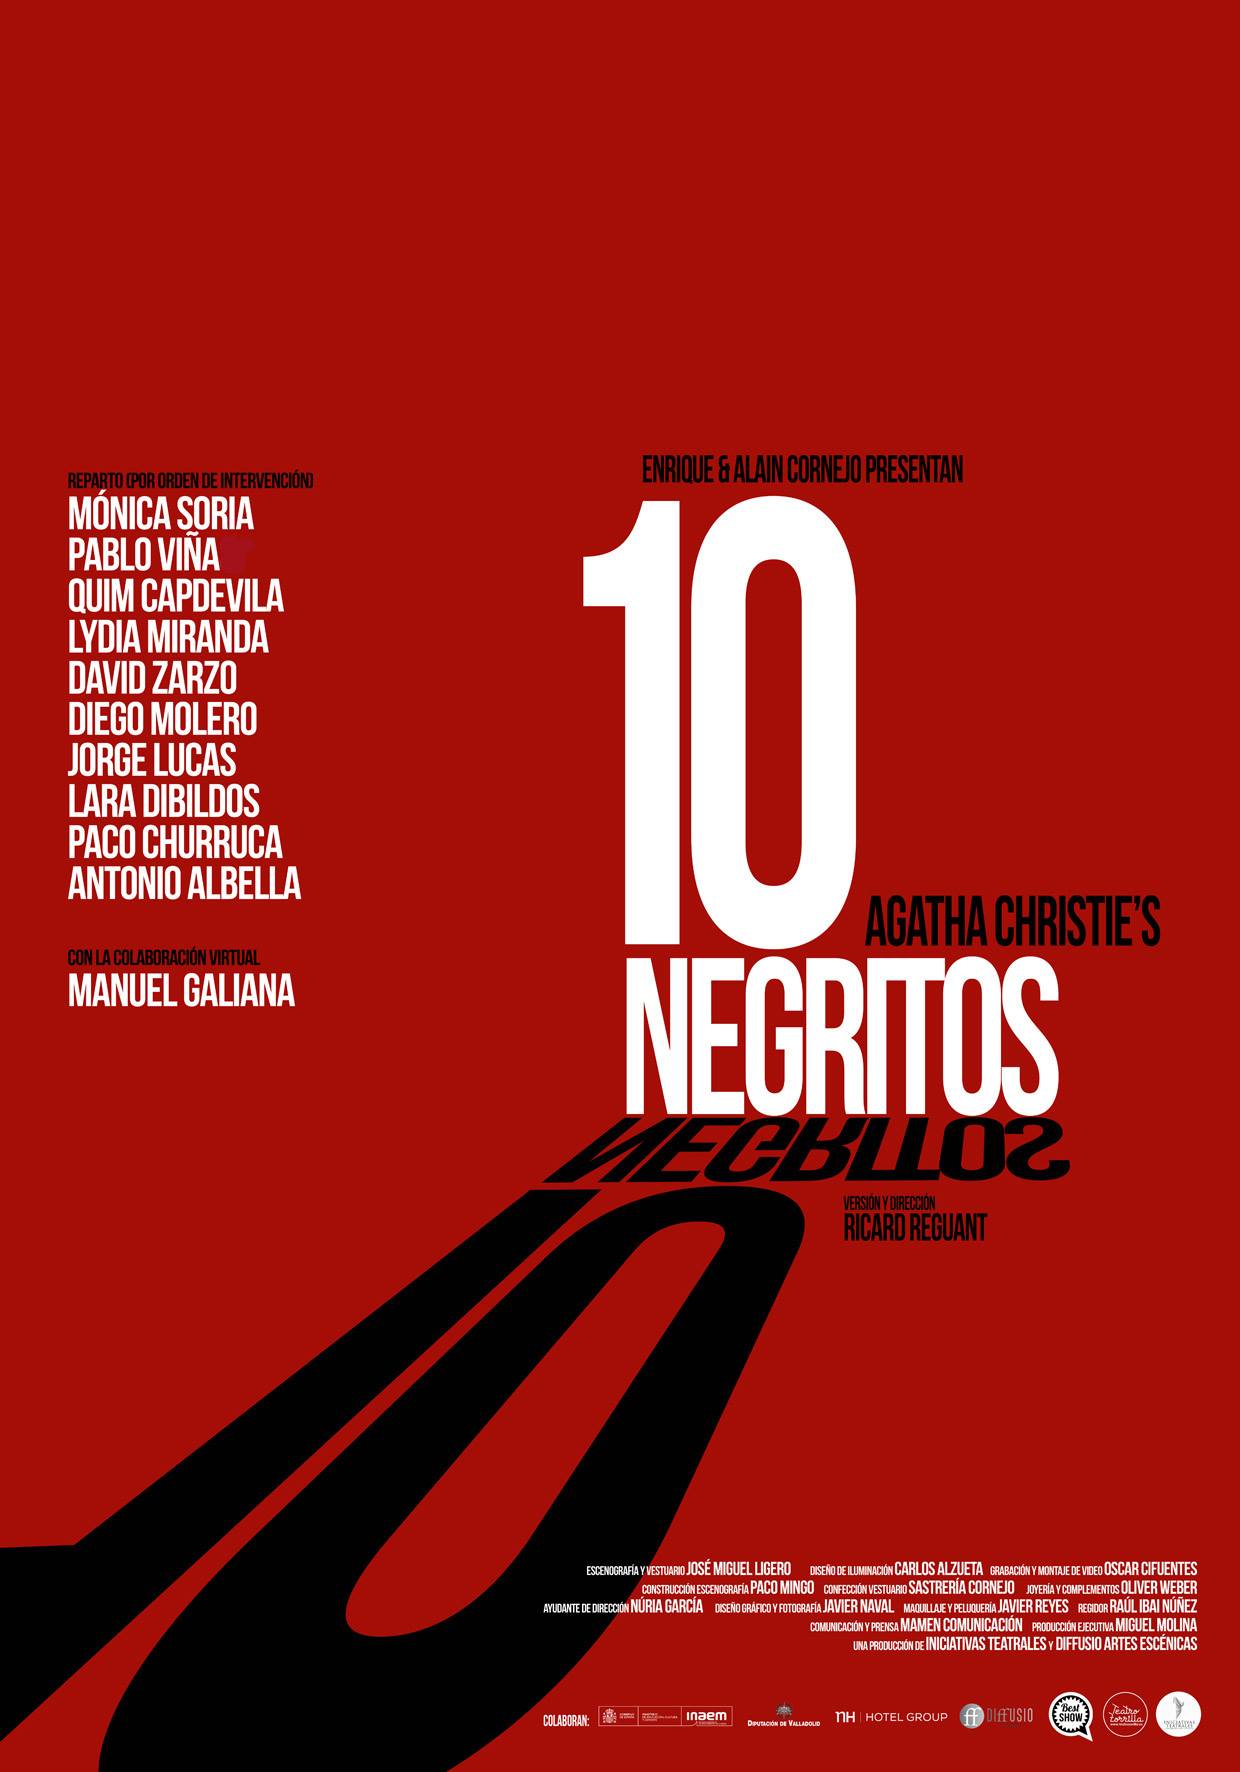 Diez Negritos by Agatha Christie PDF - The Catania Group